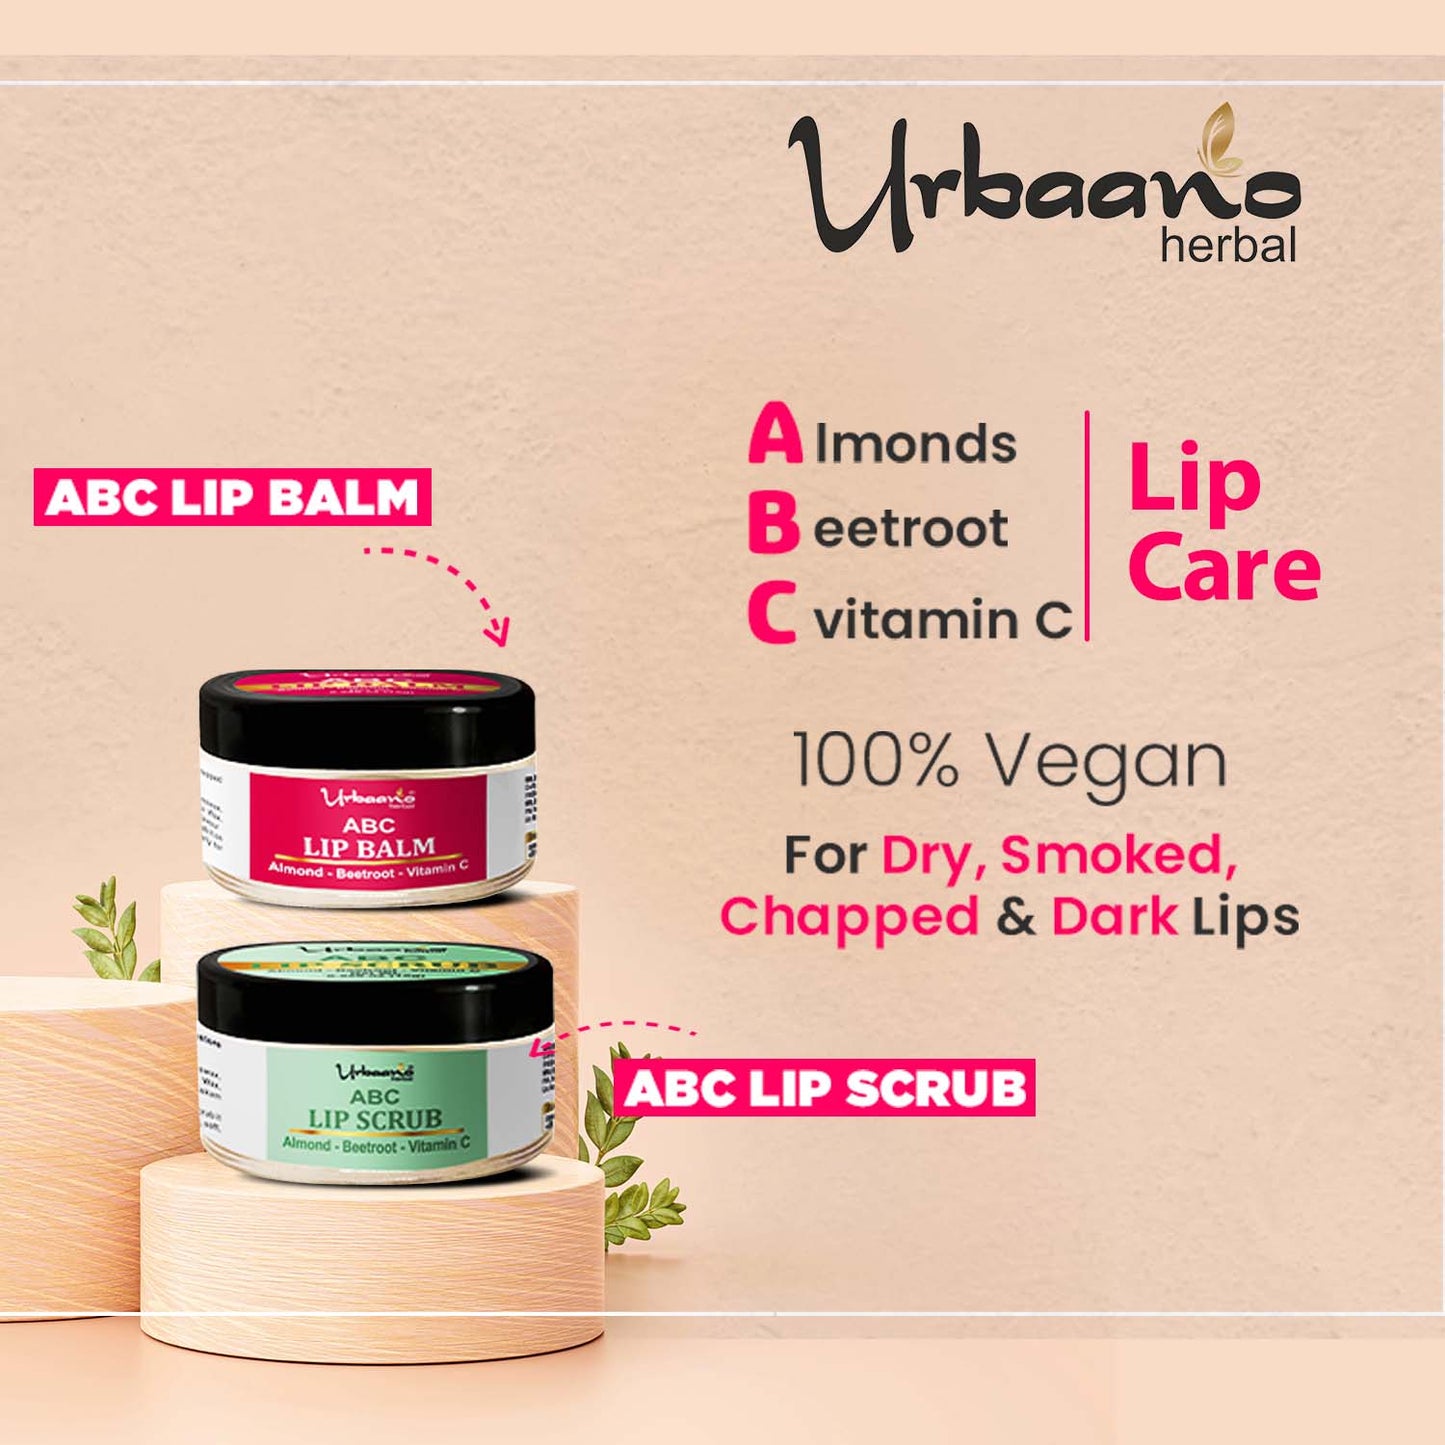 urbaano herbal abc vegan lip care for dark, chapped lips